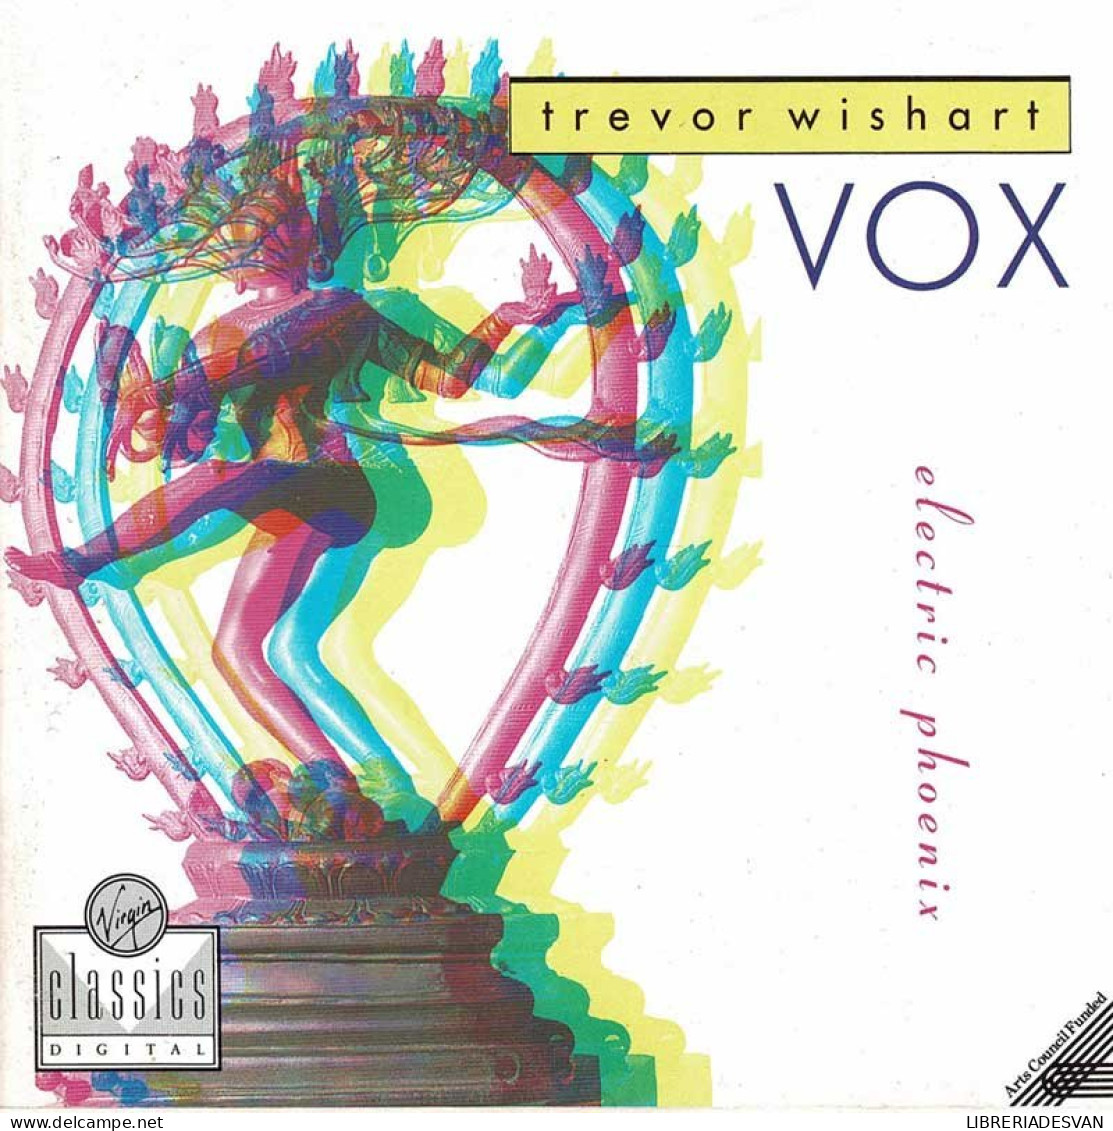 Trevor Wishart - Vox. CD - Dance, Techno & House